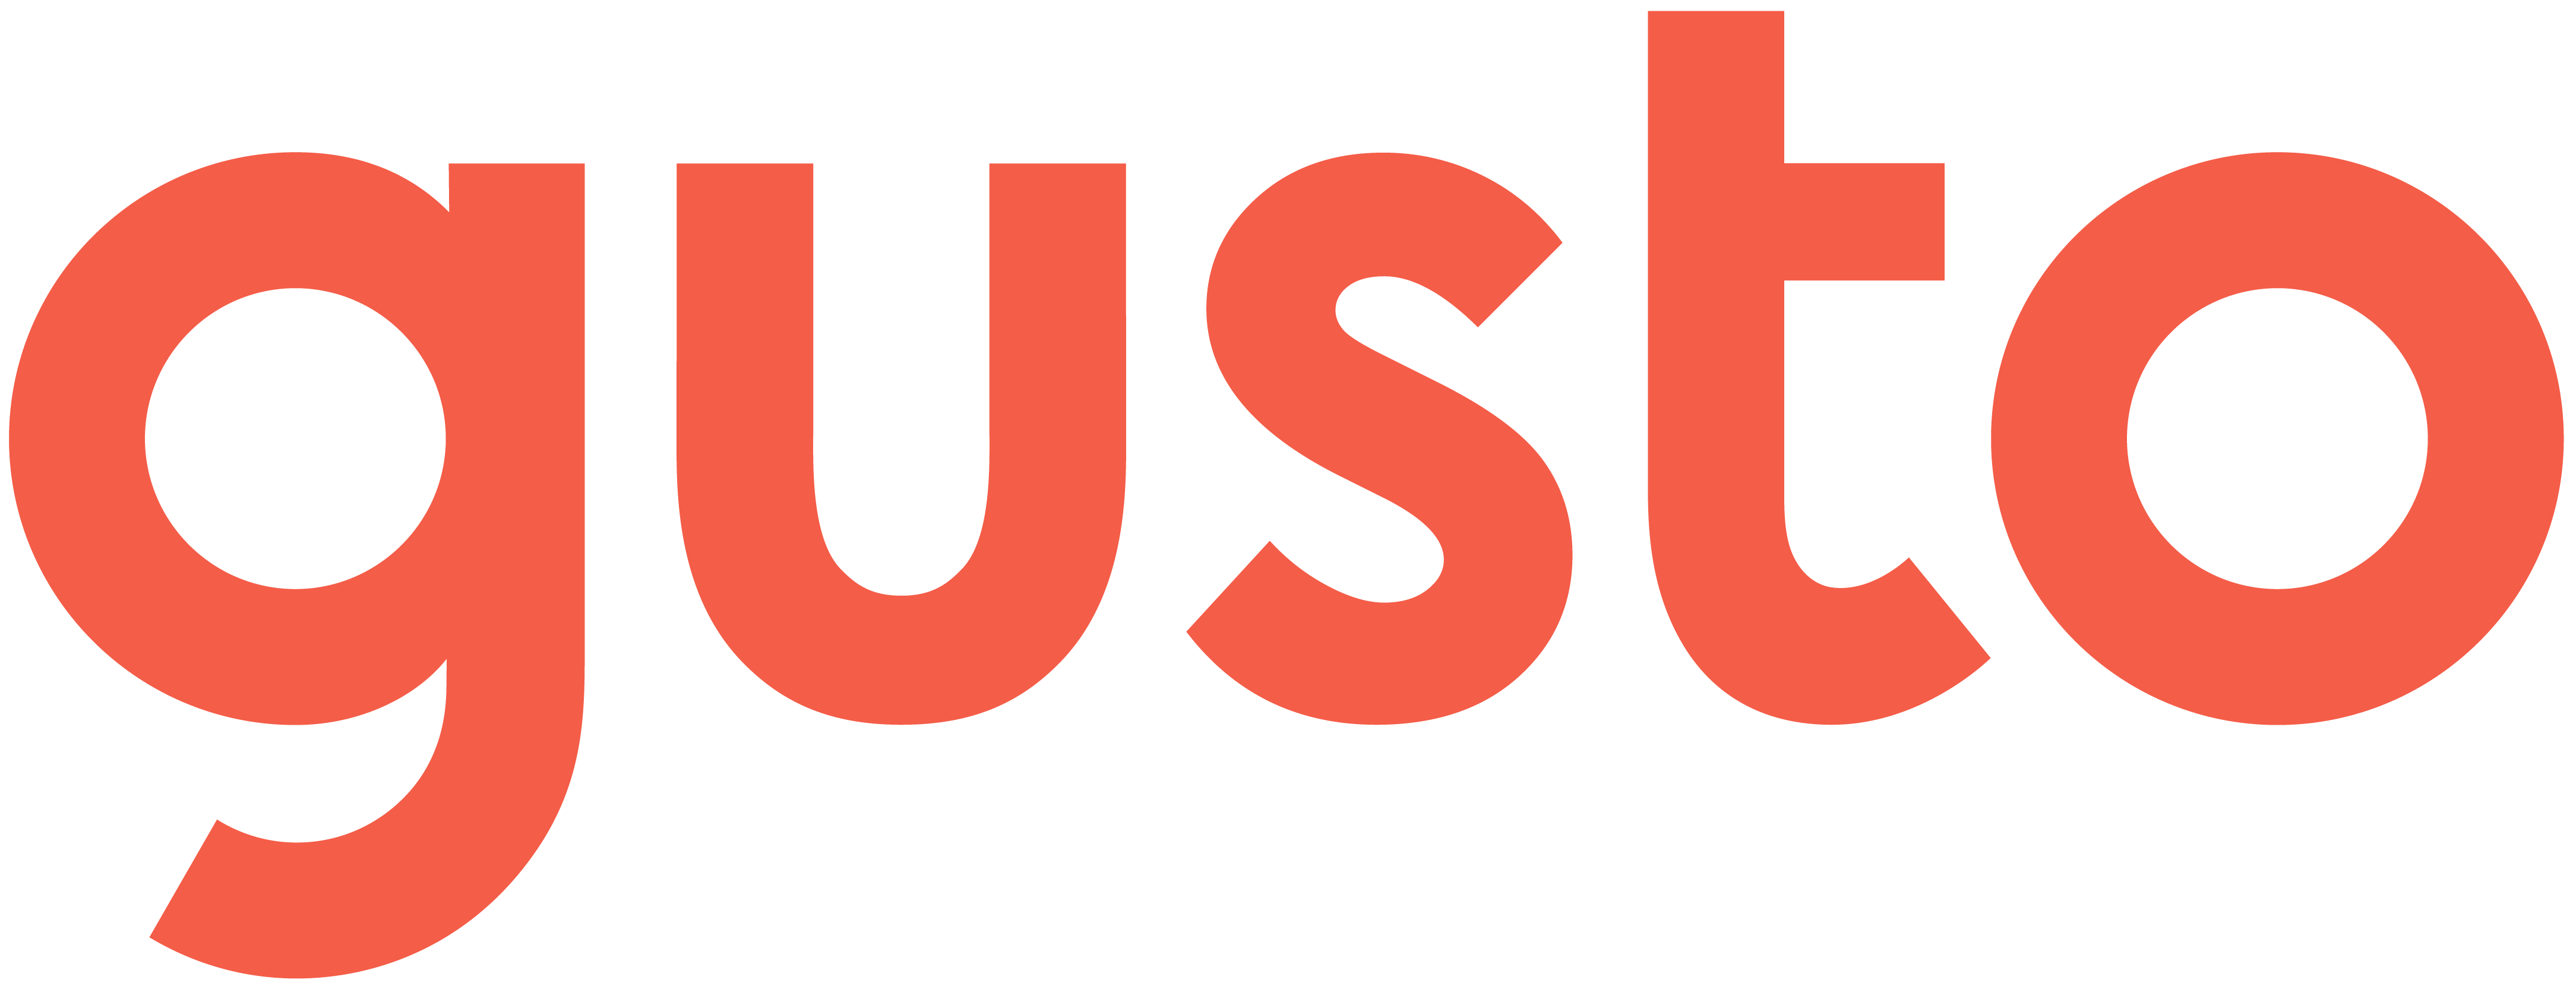 Gusto-logo_logo